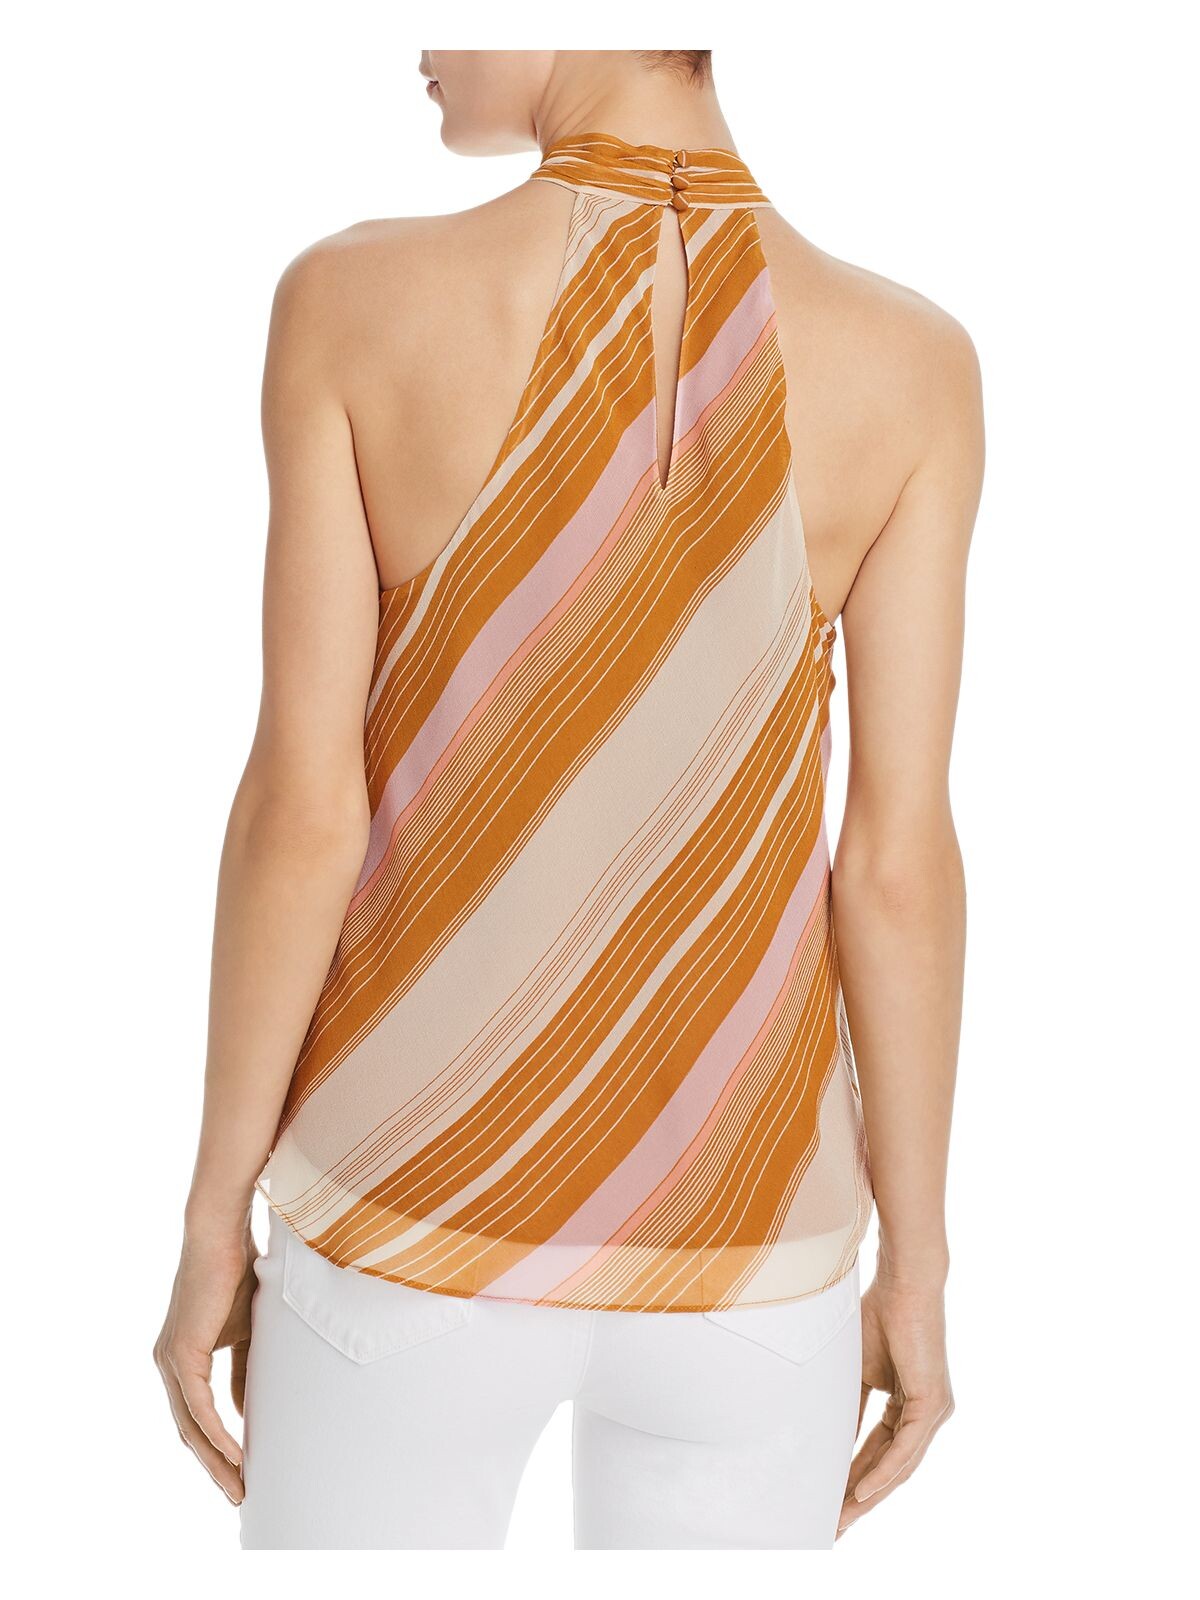 JOIE Womens Brown Sheer Striped Sleeveless Halter Top XXS